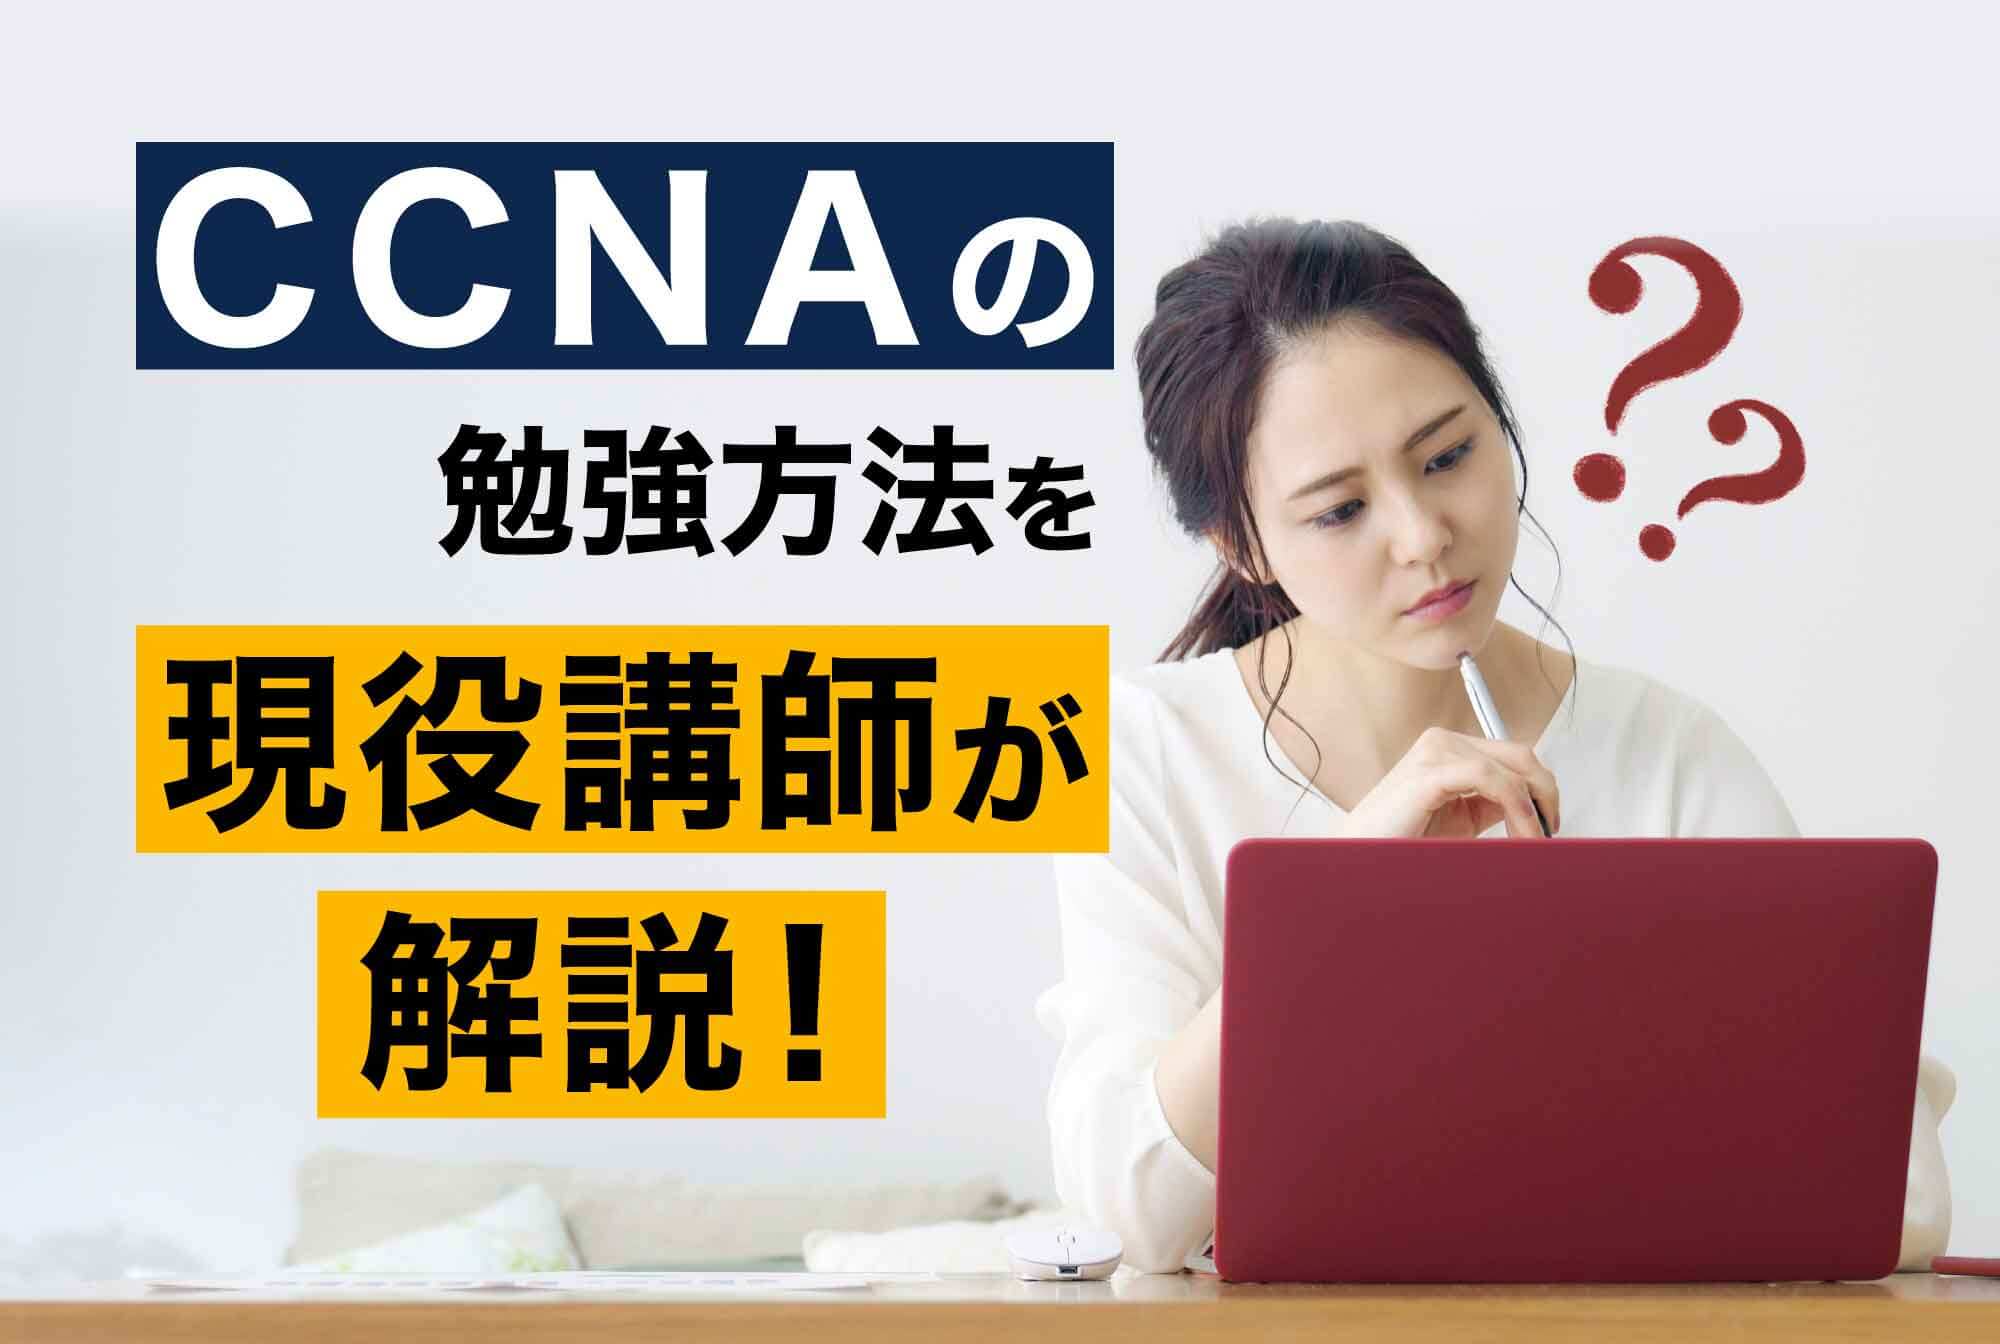 CCNA勉強方法のアイキャッチ画像